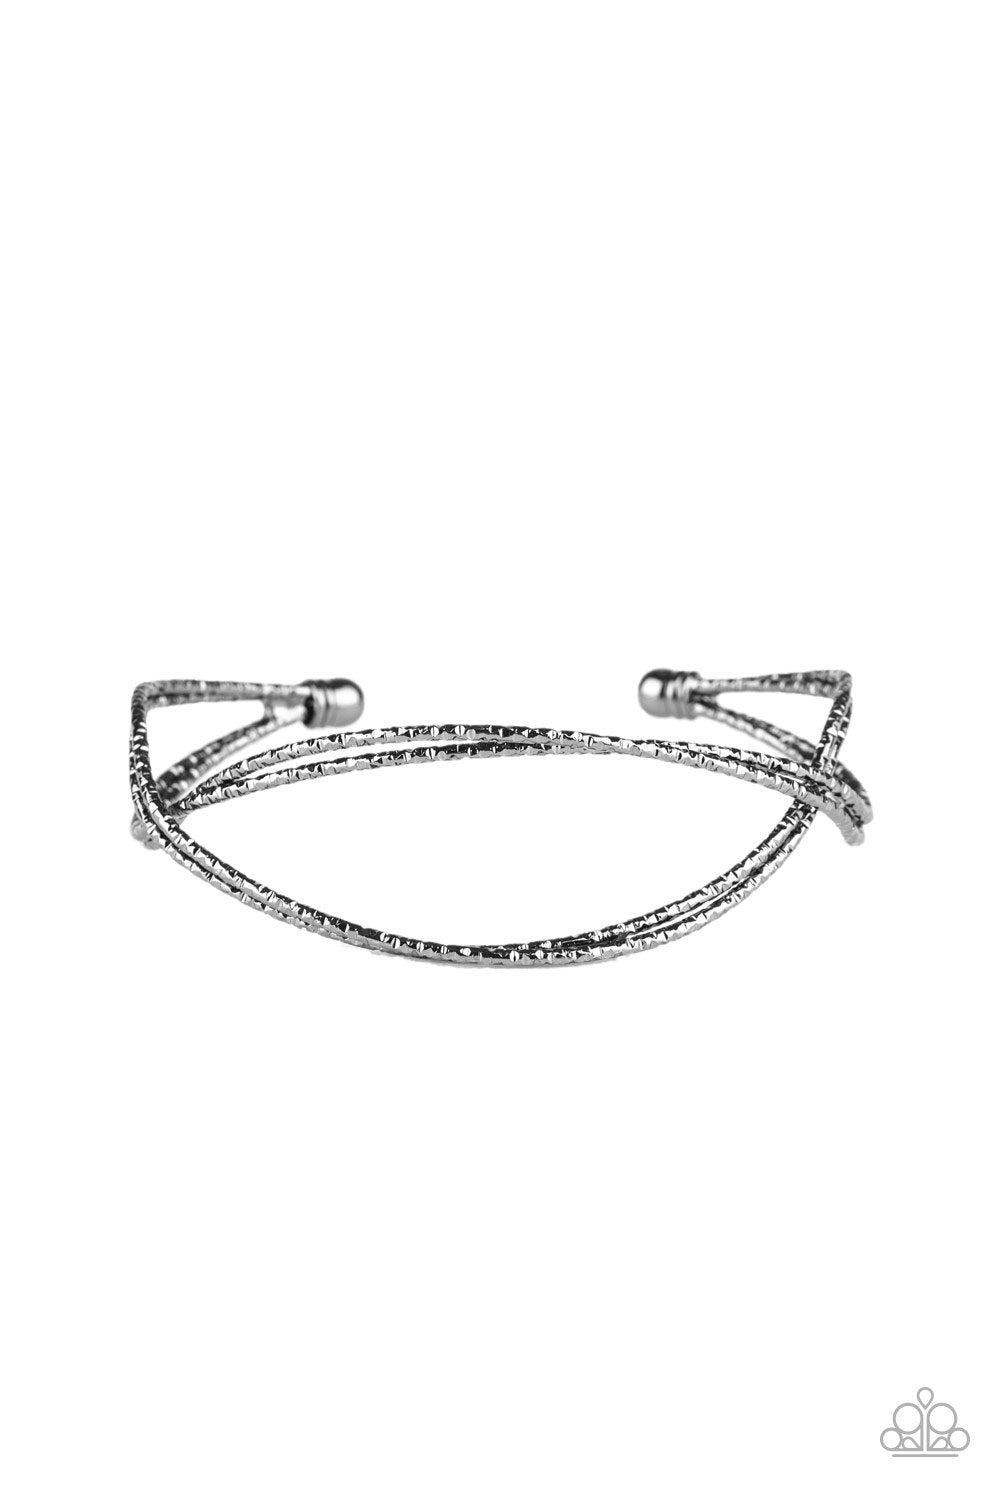 Bending Over Backwards Gunmetal Black Cuff Bracelet - Paparazzi Accessories-CarasShop.com - $5 Jewelry by Cara Jewels